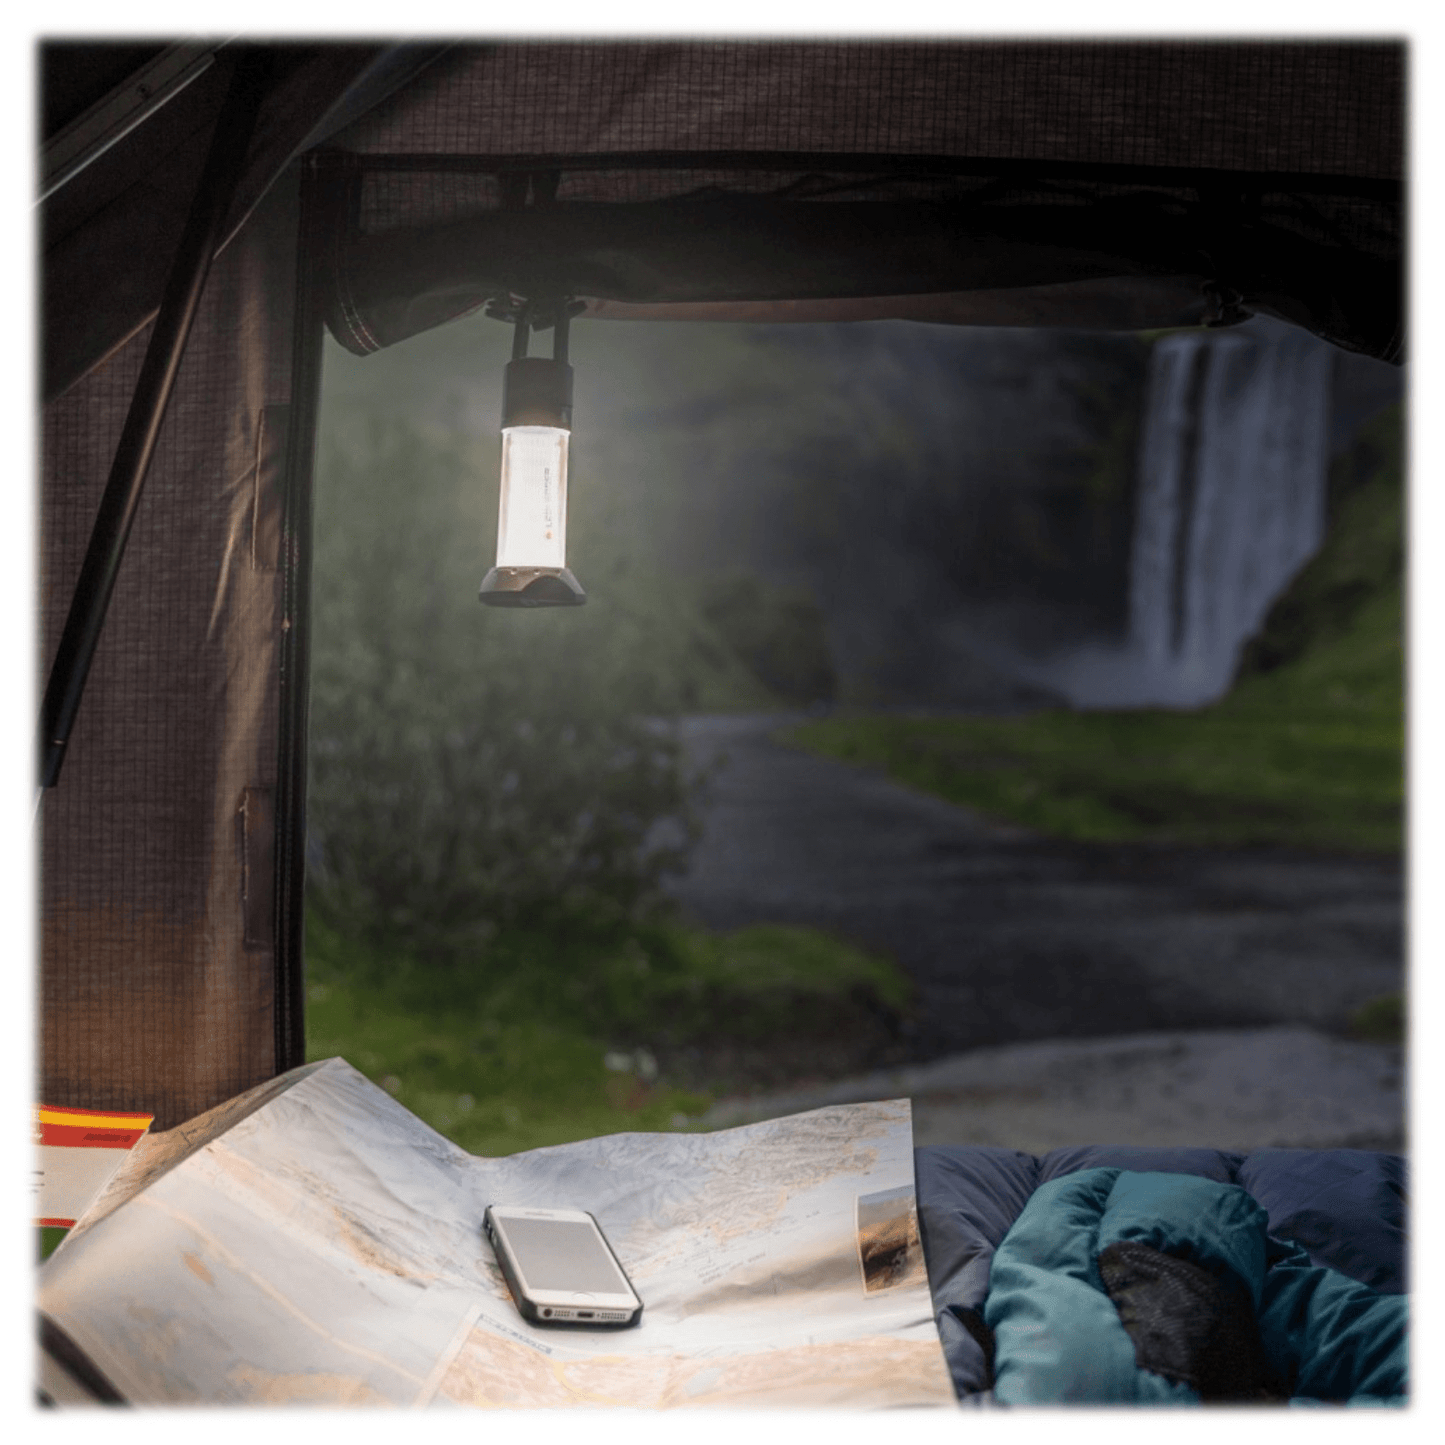 LED LENSER ML6 Rechargeable Camping Lantern 750 Lumens